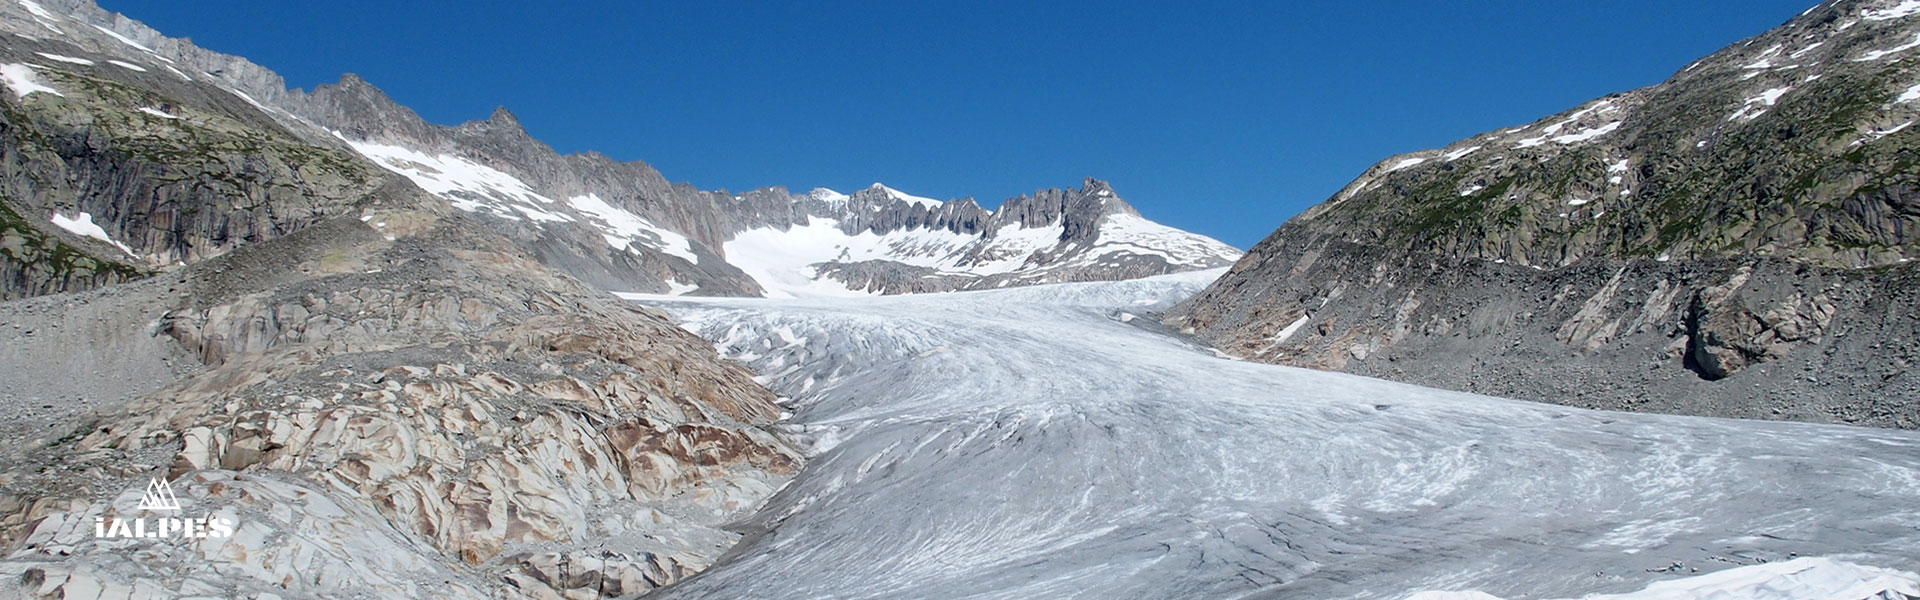 Glacier du Rhône, Suisse